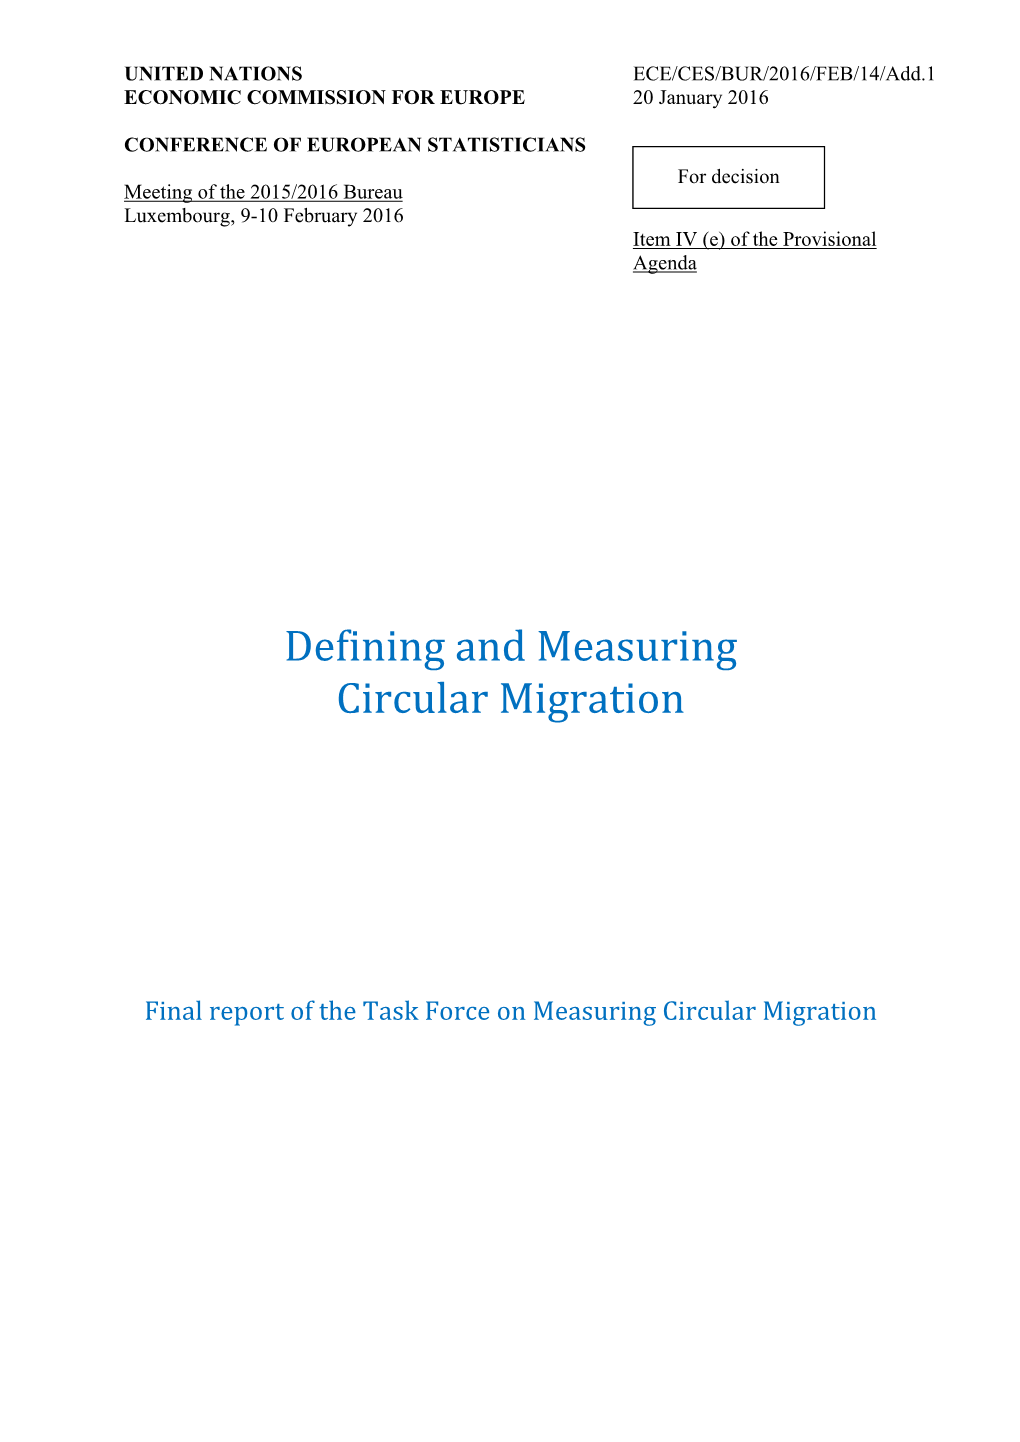 Defining and Measuring Circular Migration